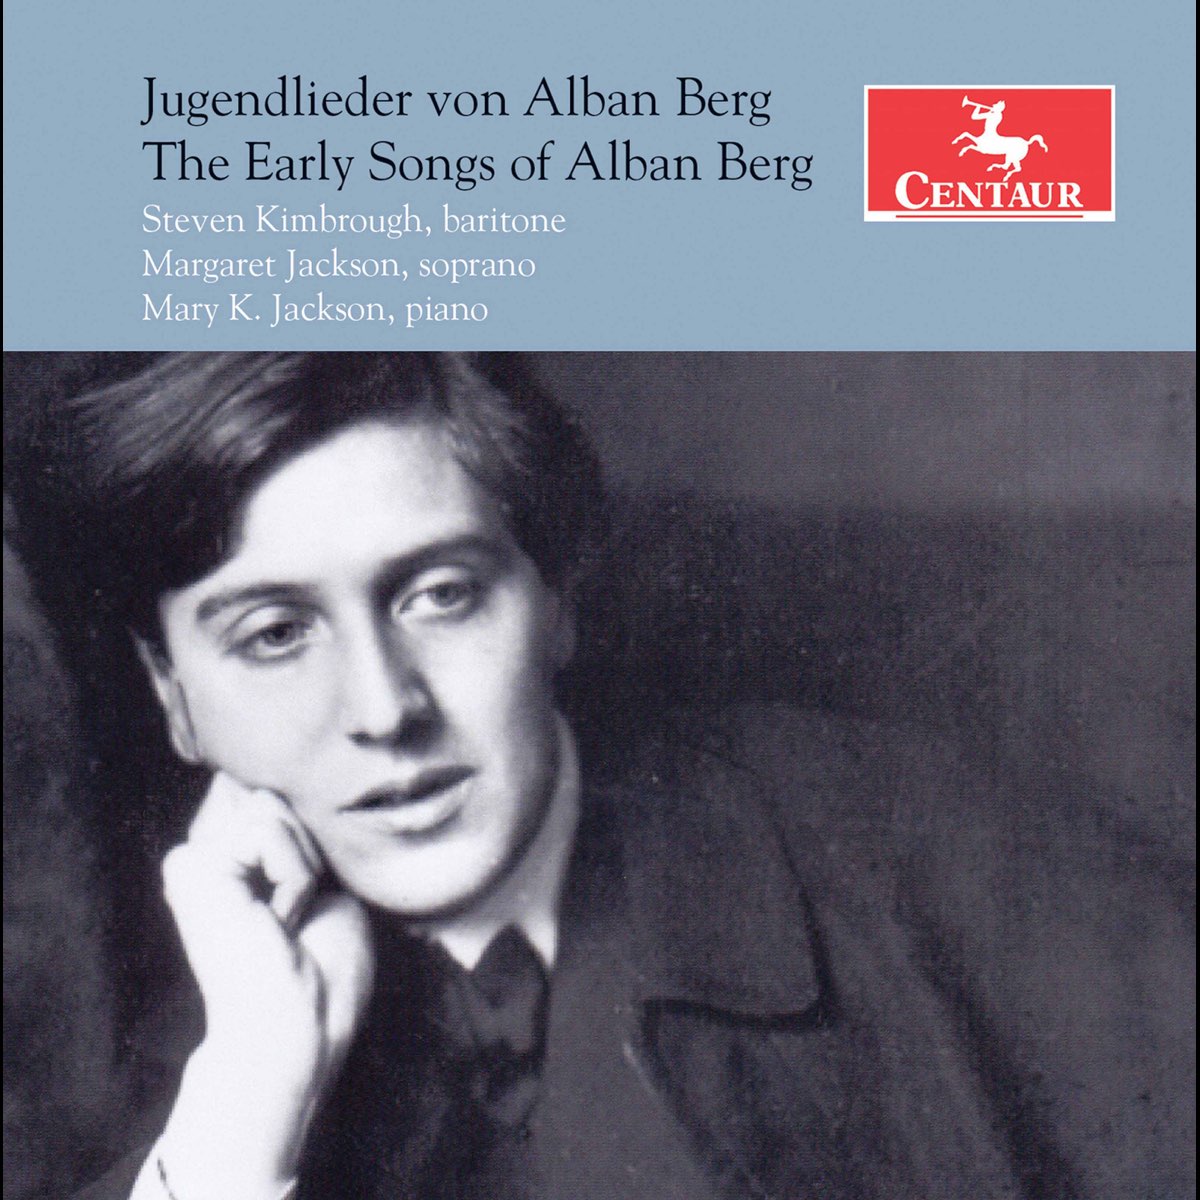 Альбан Берг австрийский композитор. Альбан Берг портрет. Альбан Берг молодой. Альбан берг